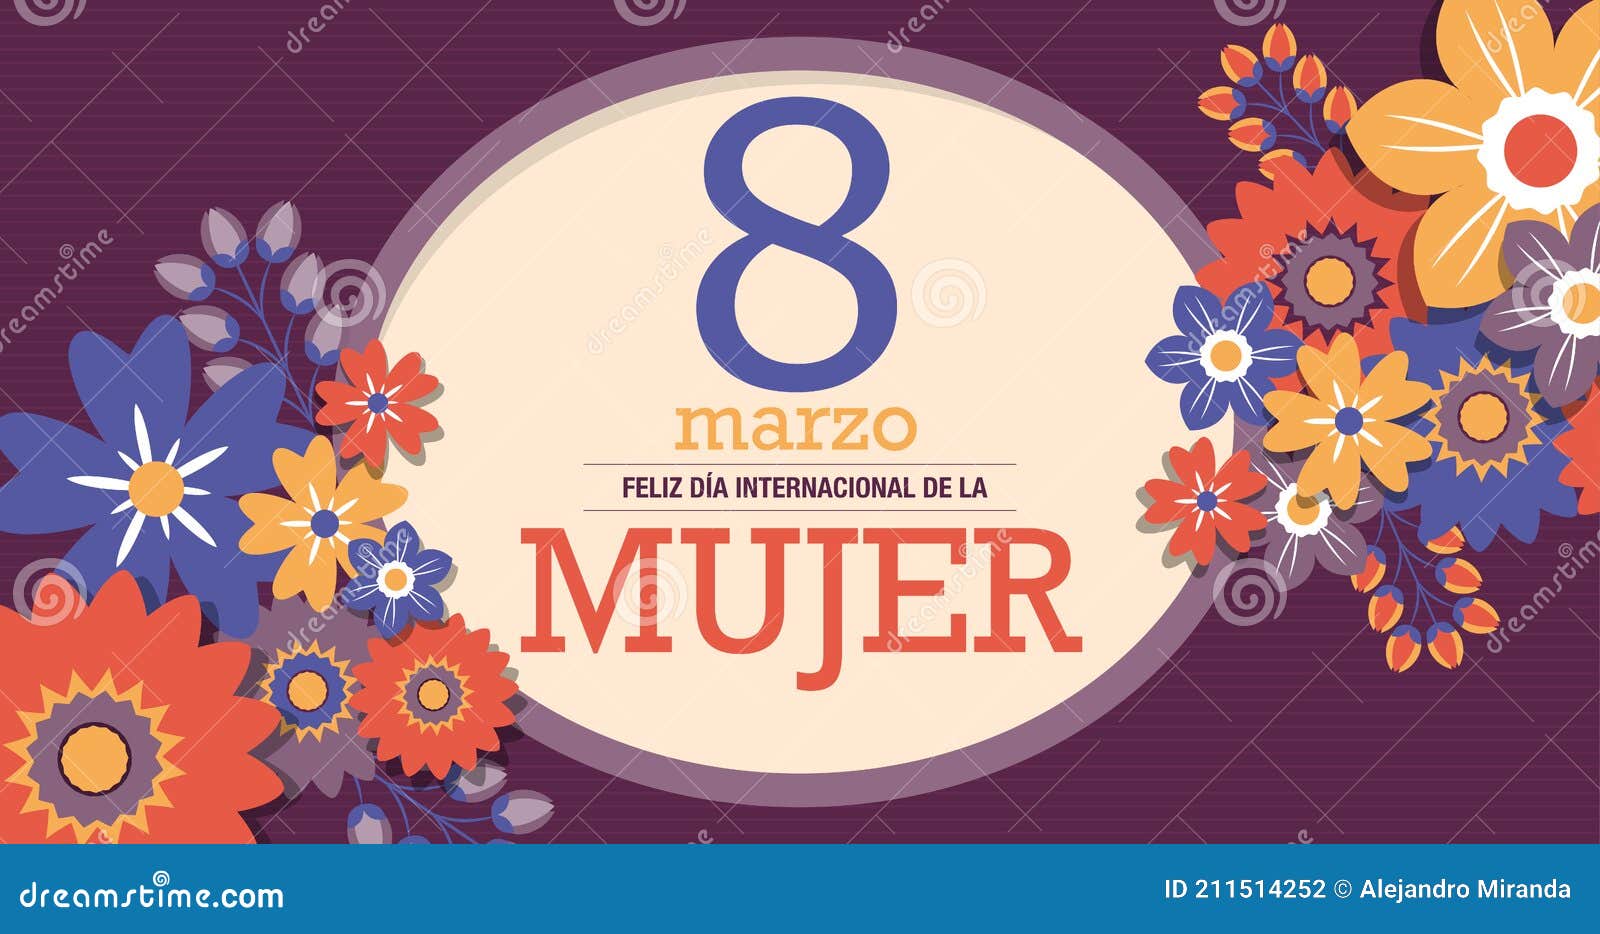 feliz dia international de la mujer - happy international women s day in spanish language. text inside a yellow oval surrounded by